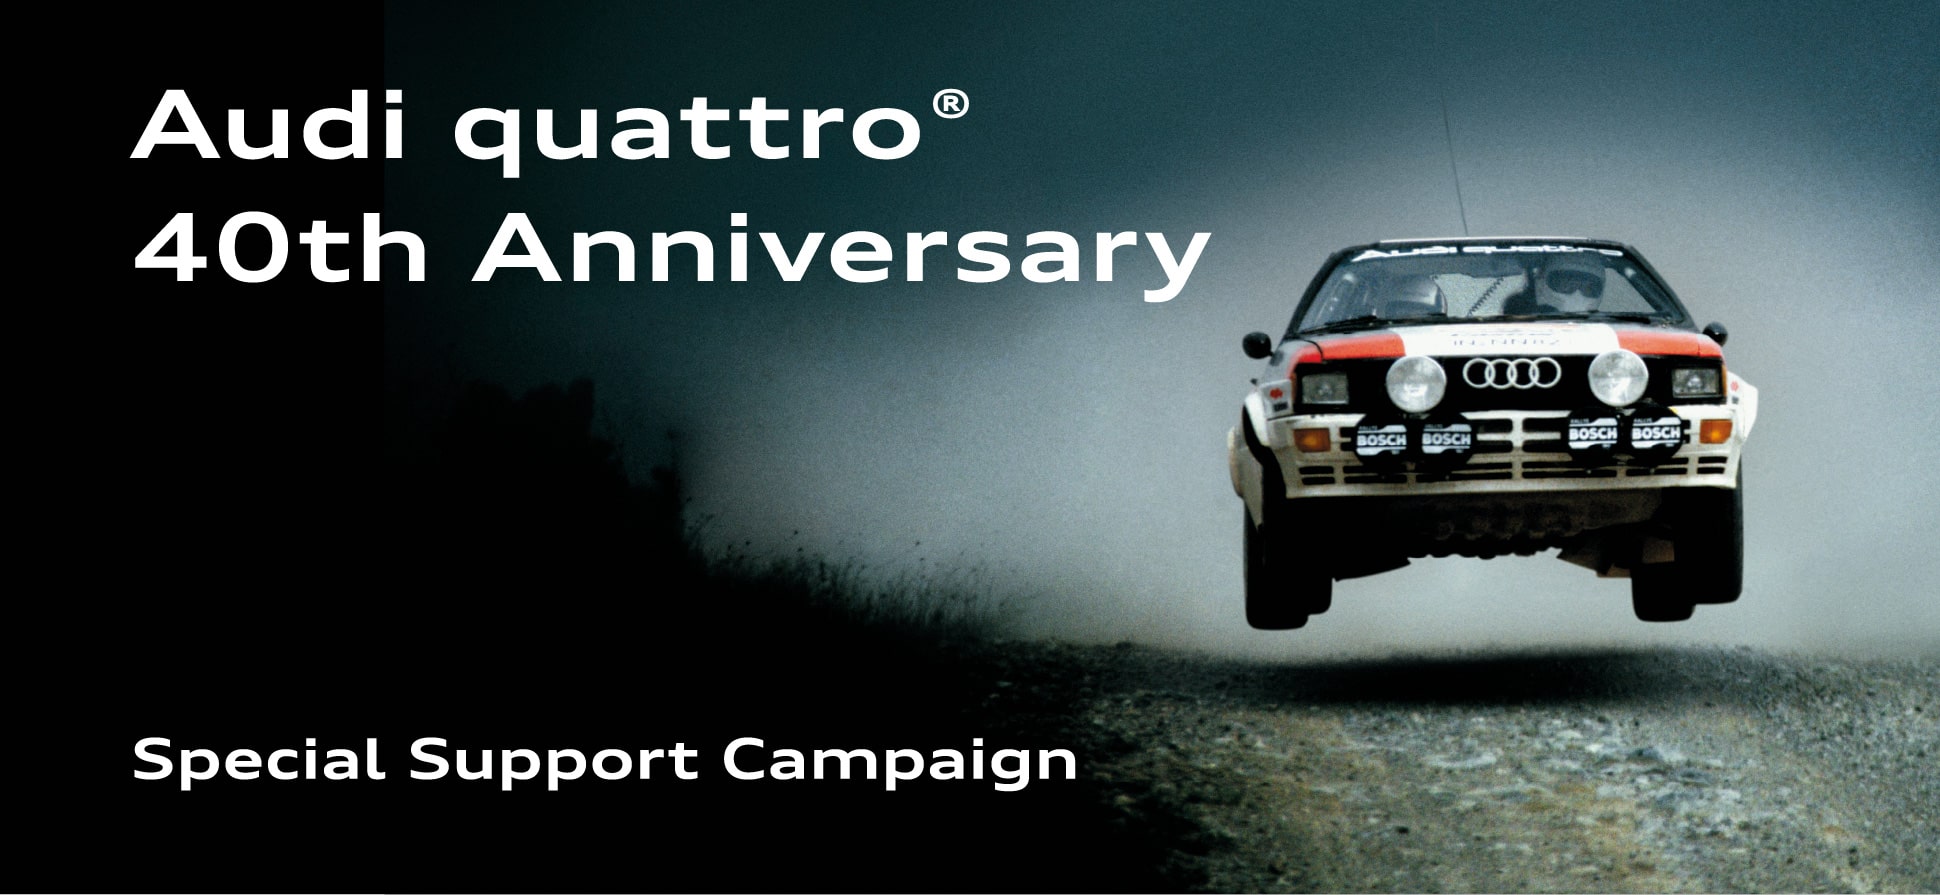 Audi quattro 40th Anniversary